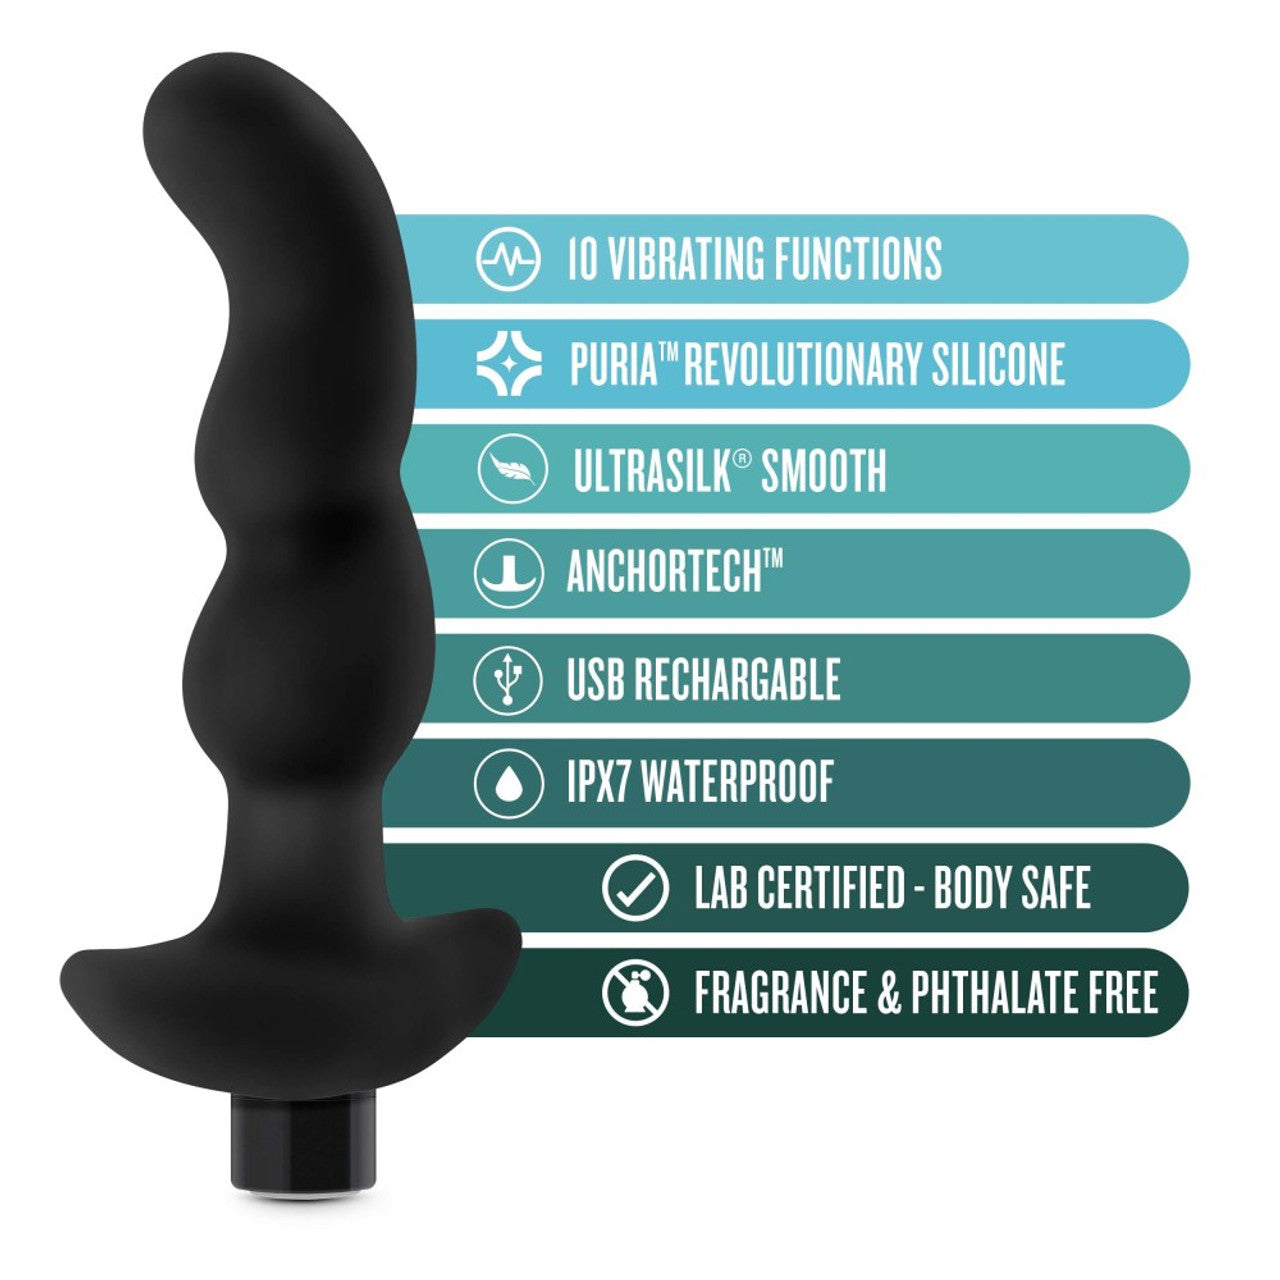 Anal Adventures Platinum - Silicone Vibrating Prostate Massager 03 - Black